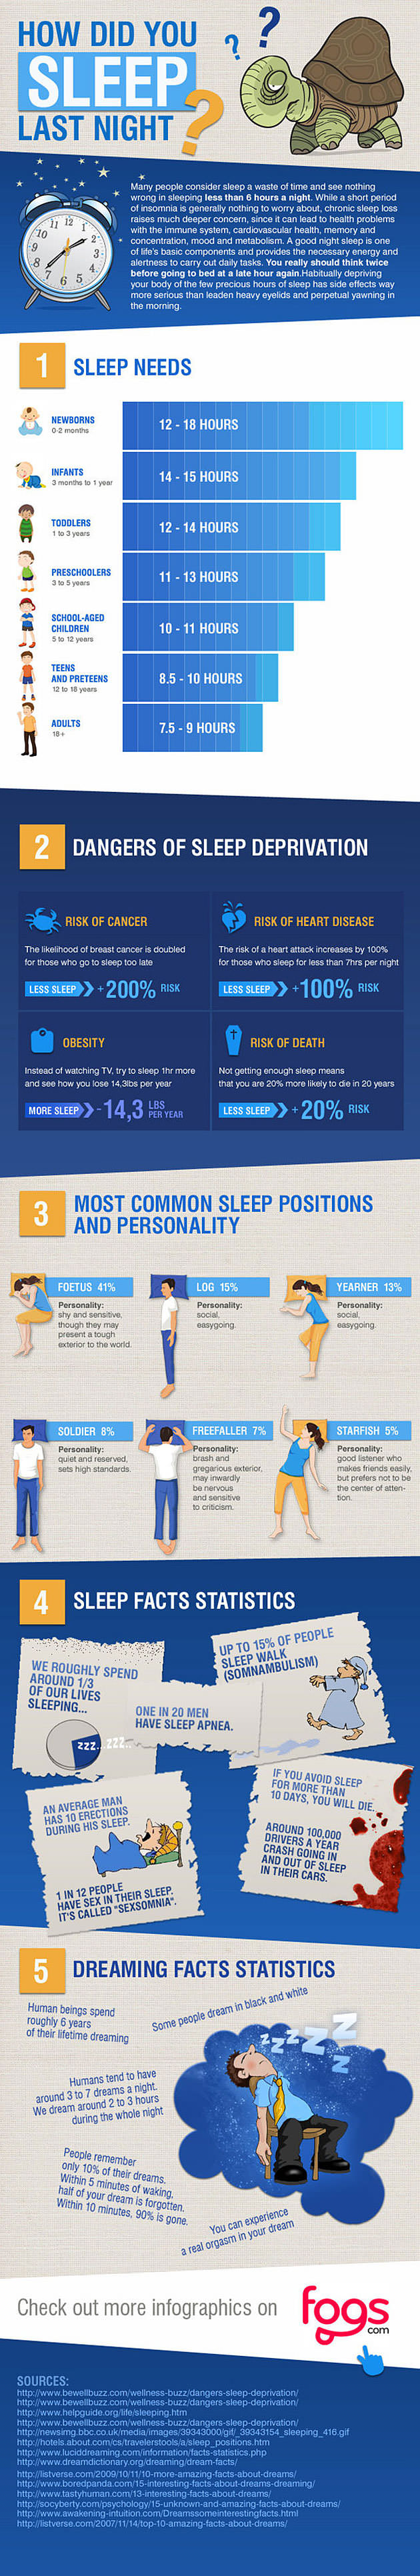 How Did You Sleep Last Night Infographic